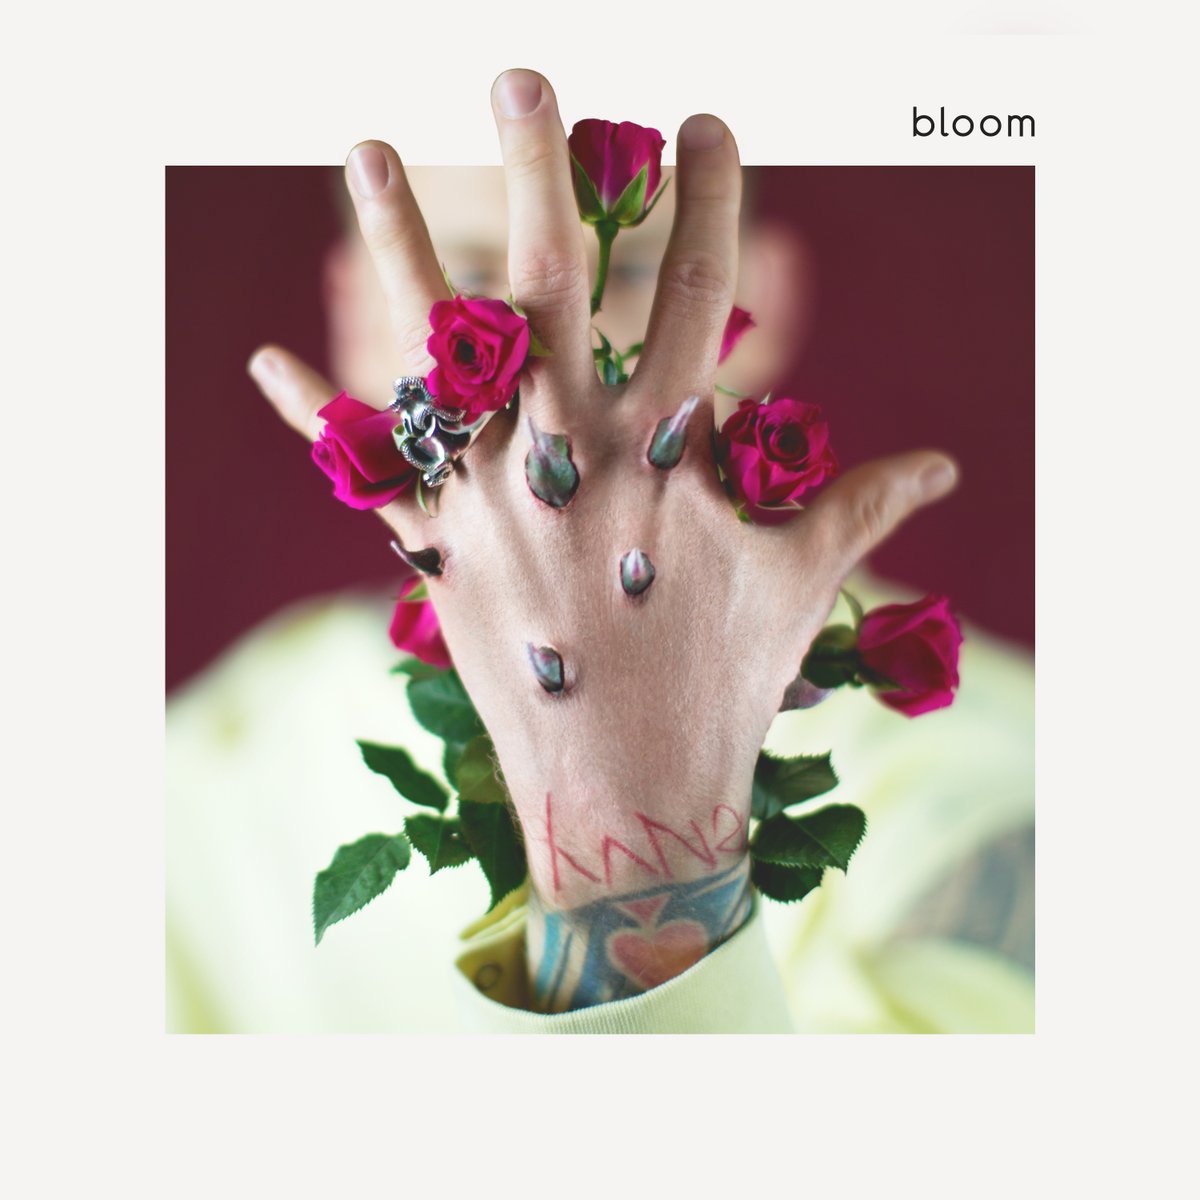 Machine Gun Kelly Announces New Album 'bloom'; Reveals Artwork, Release Date & Track ...